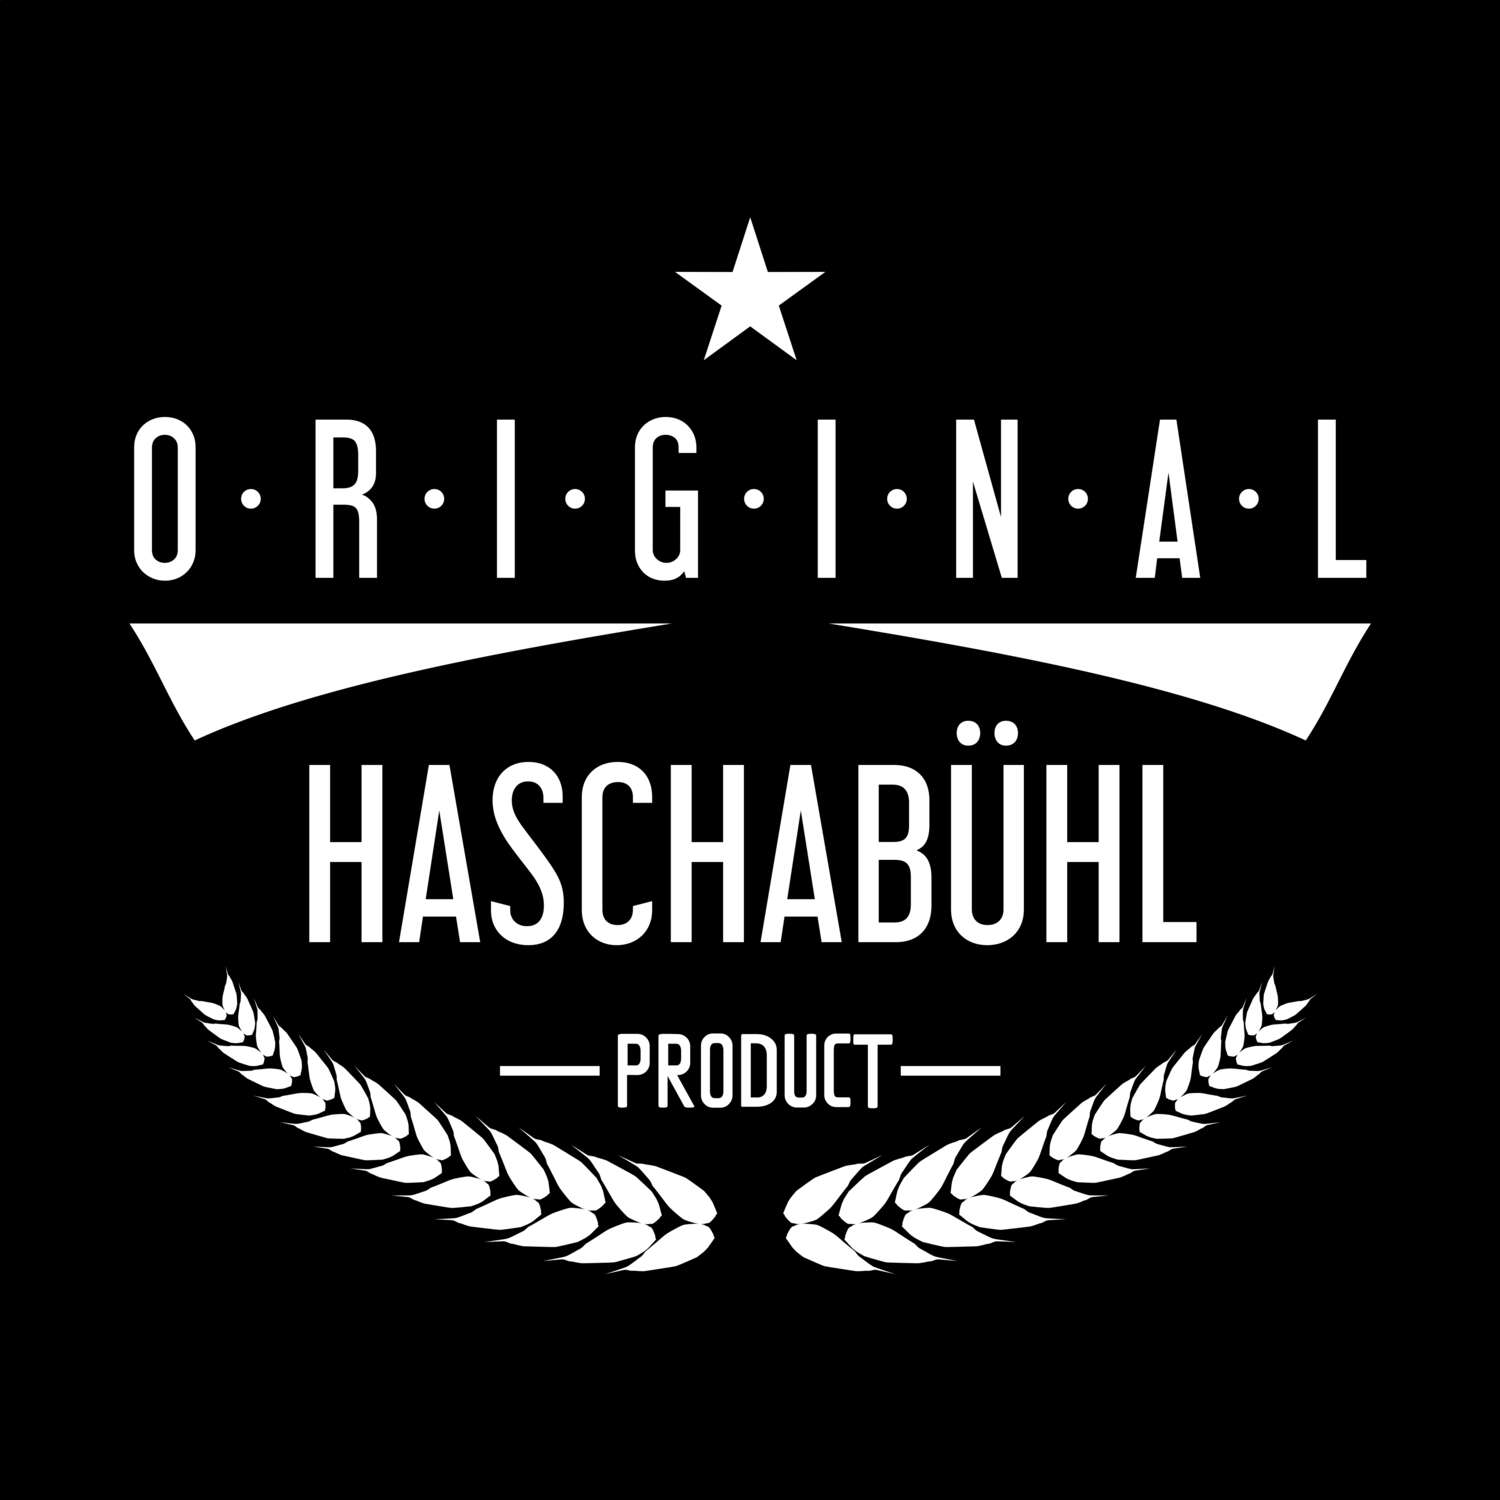 Haschabühl T-Shirt »Original Product«